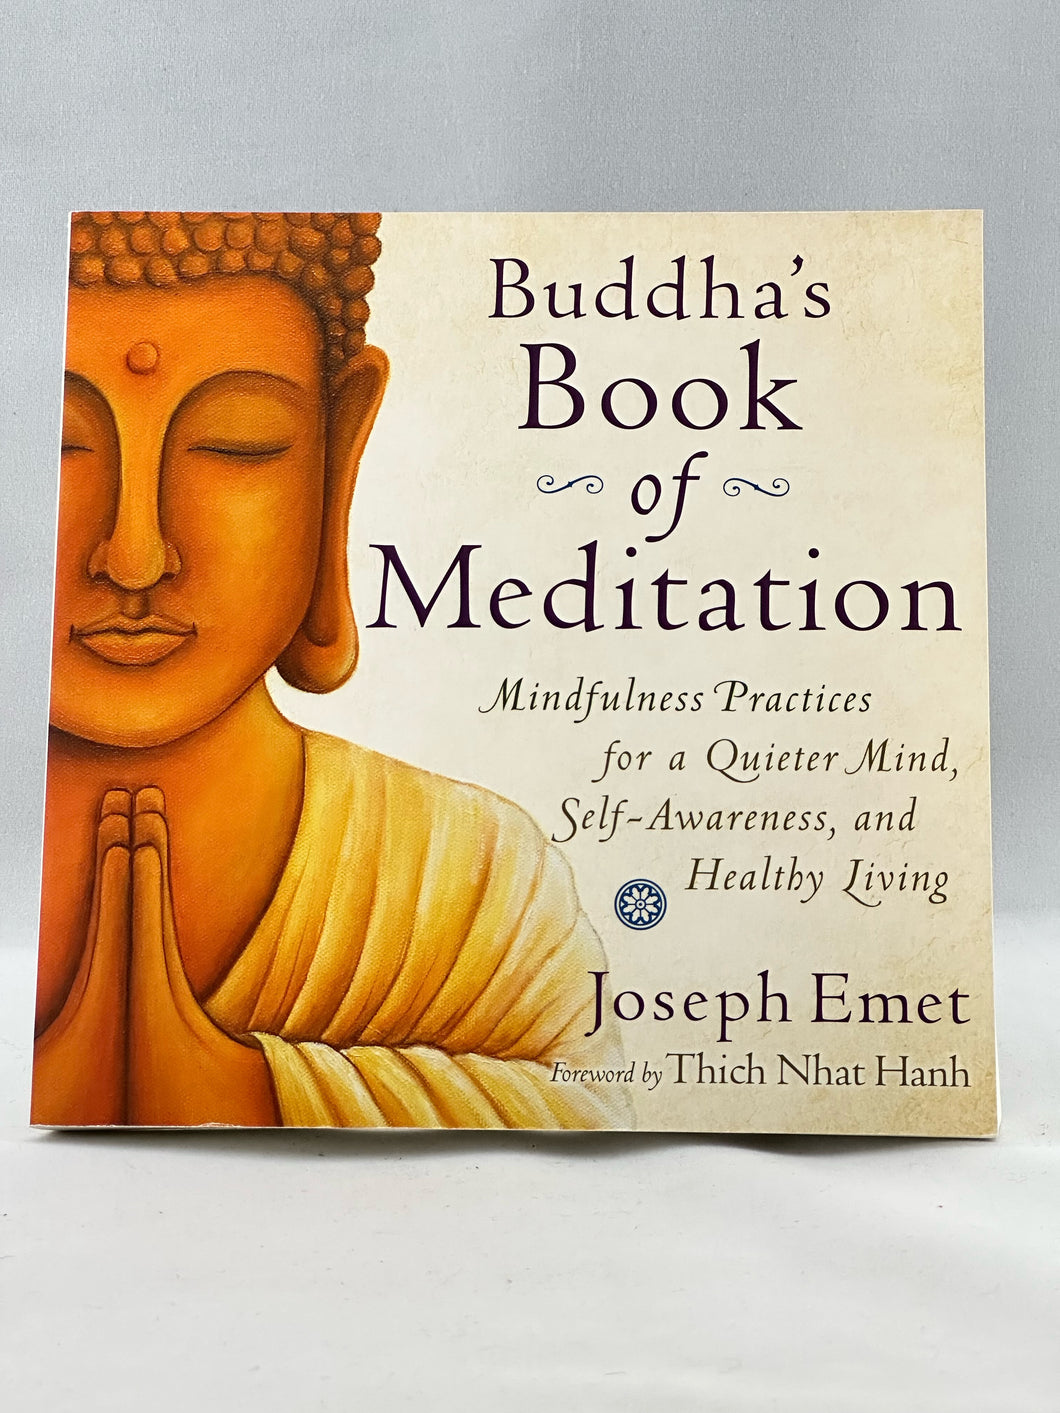 Buddhas Book of Meditation